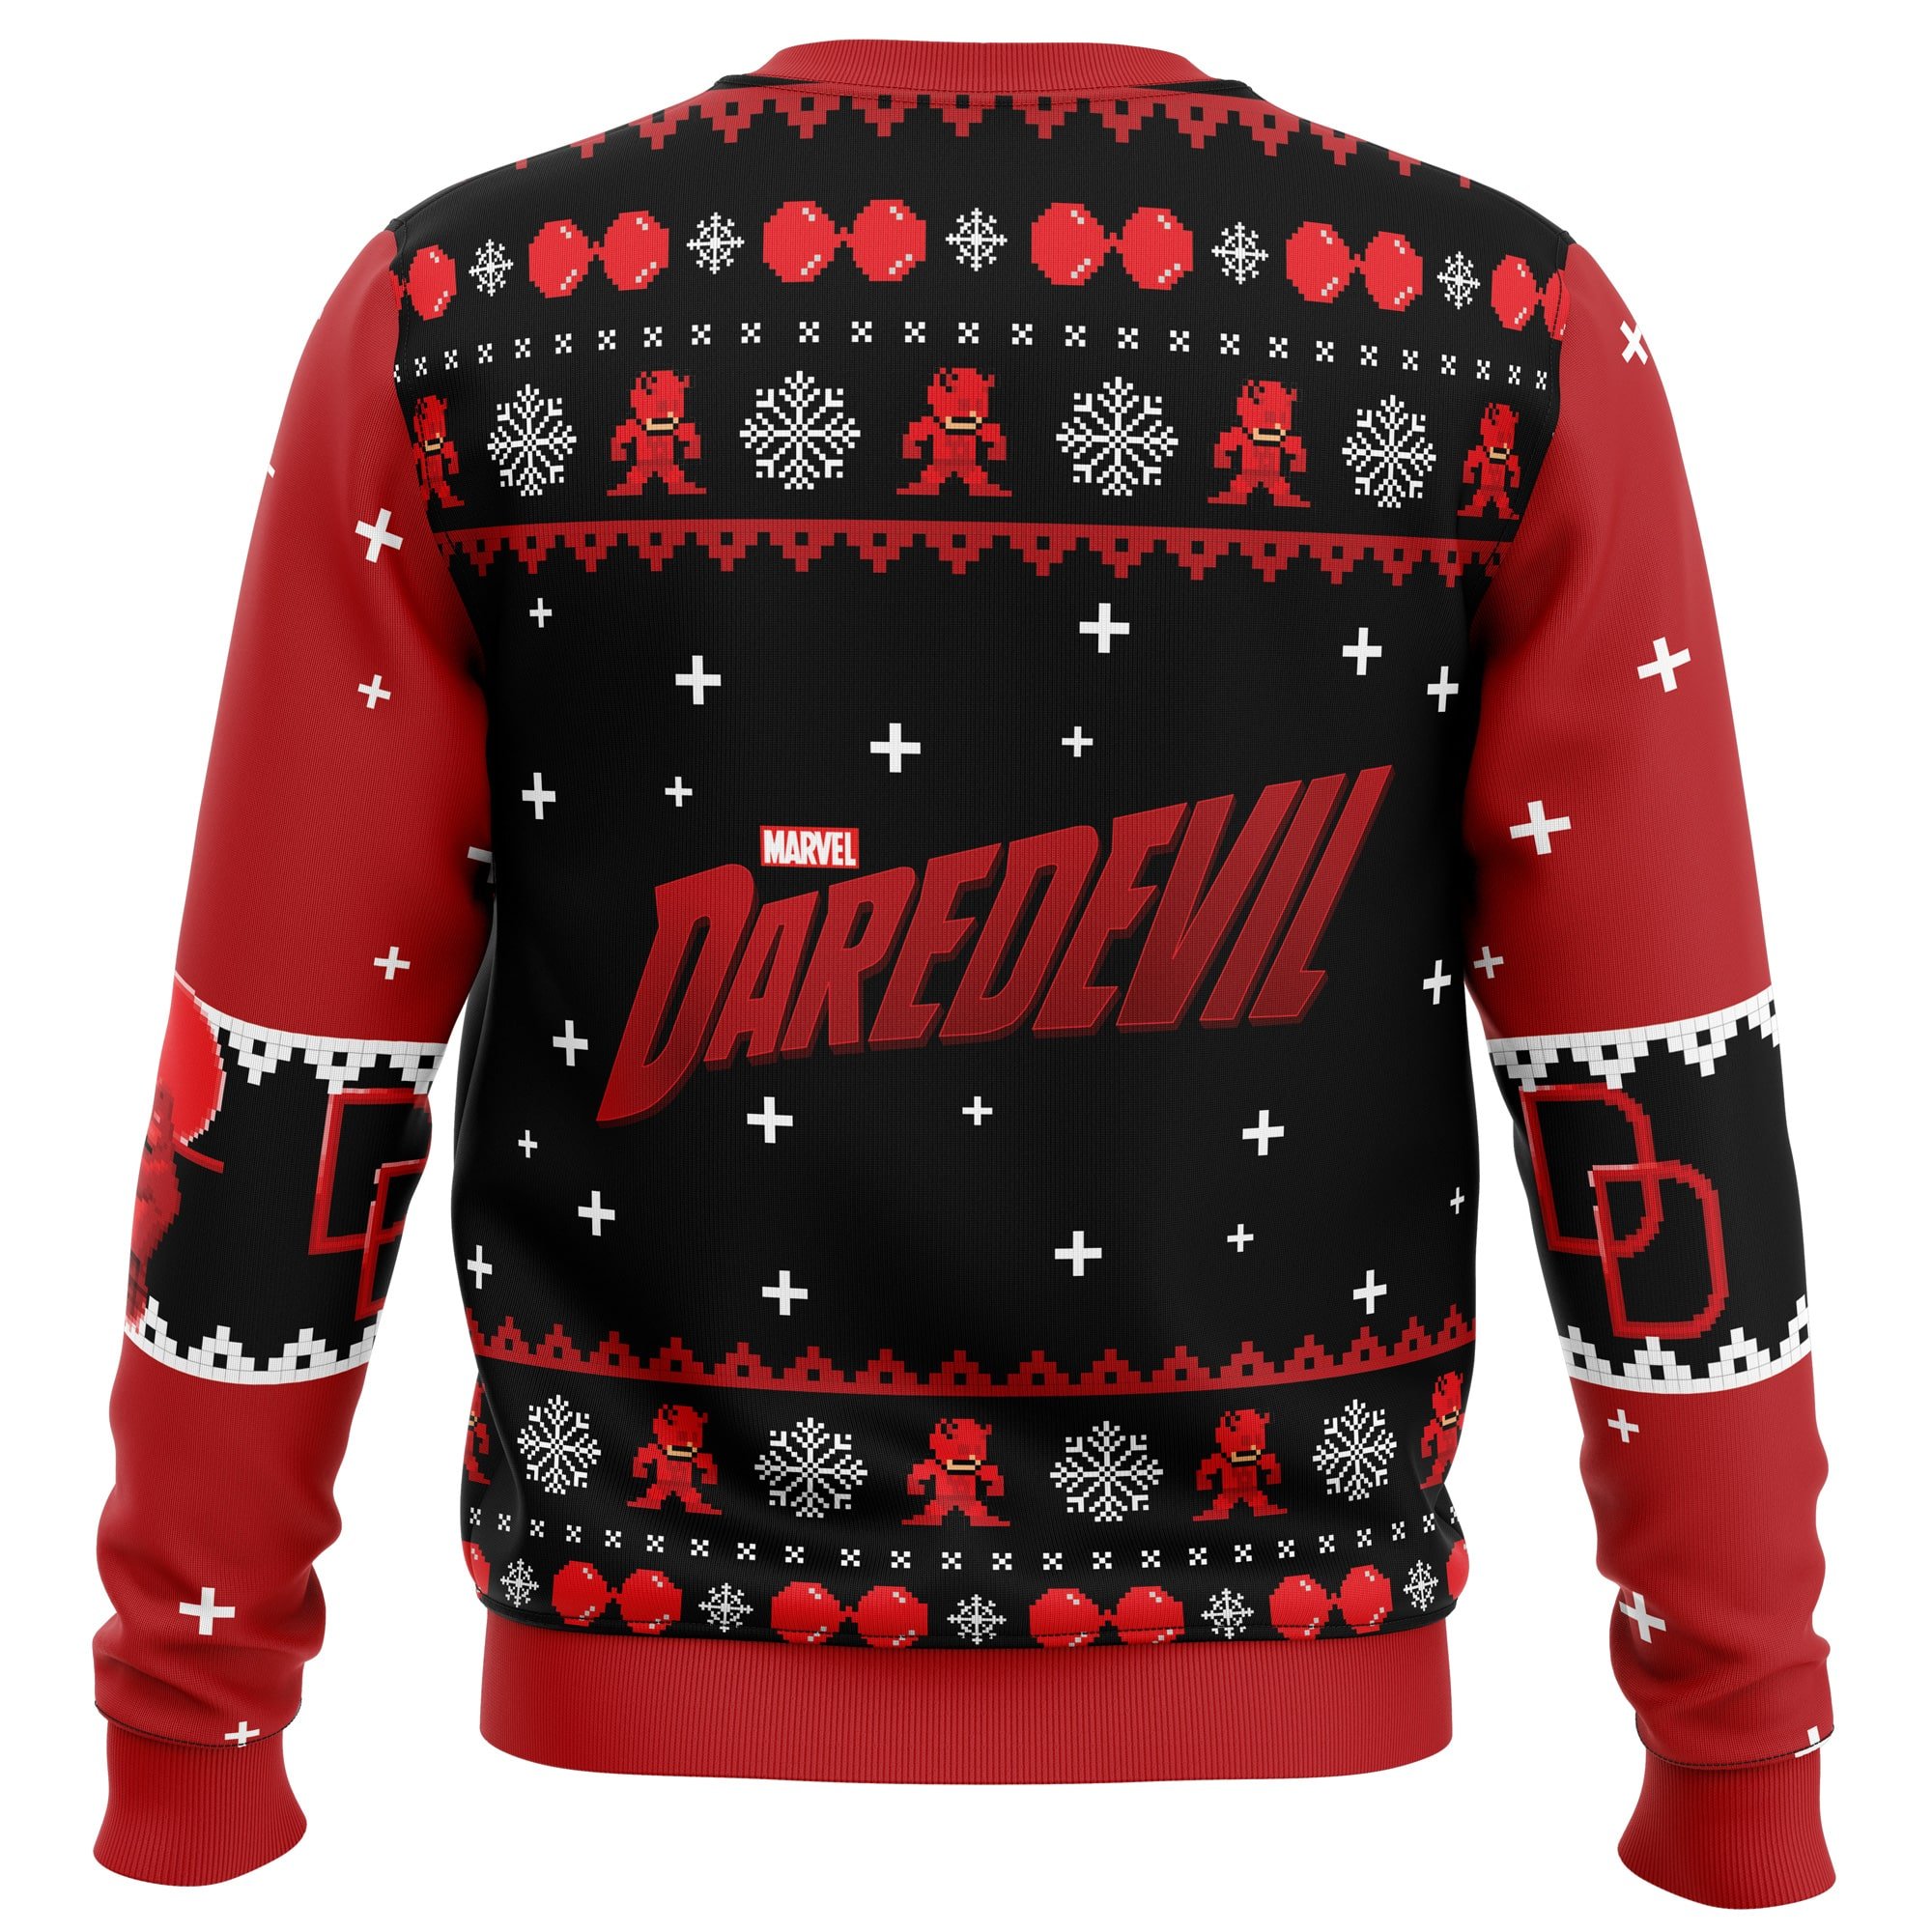 Better Call Murdock! Daredevil Ugly Christmas Sweater